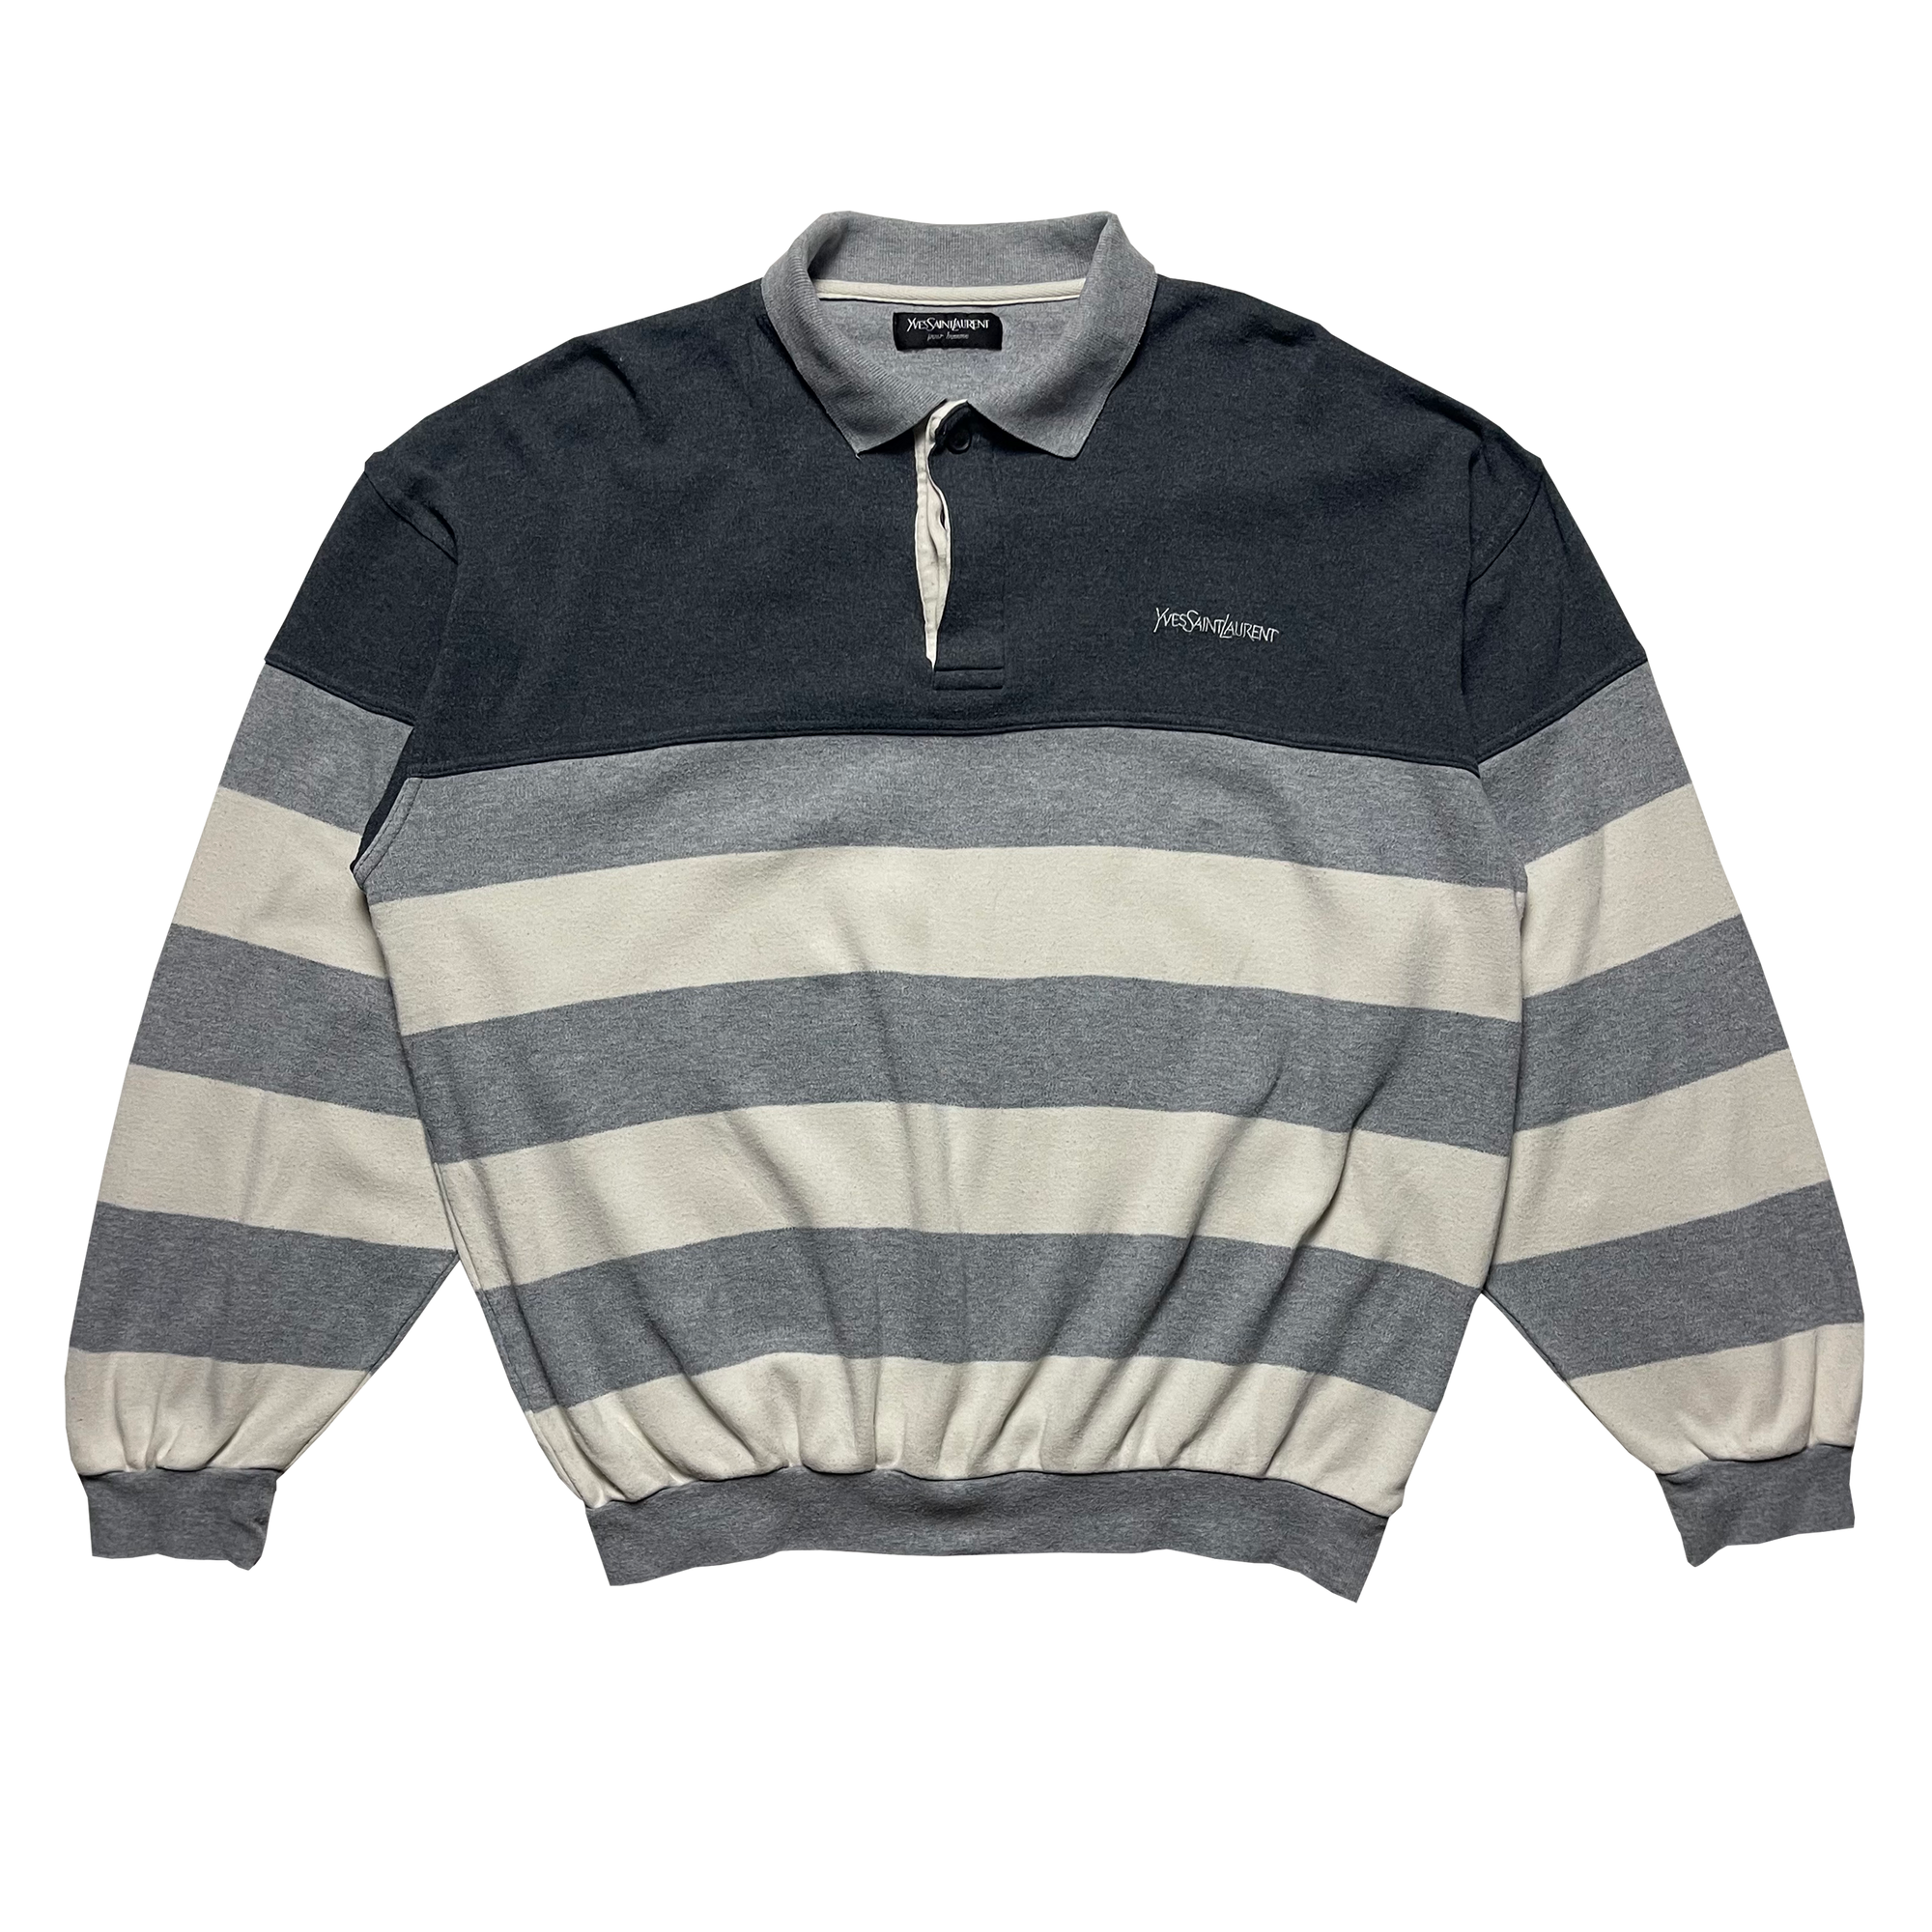 Sweatshirt - Yves Saint Laurent - Gris